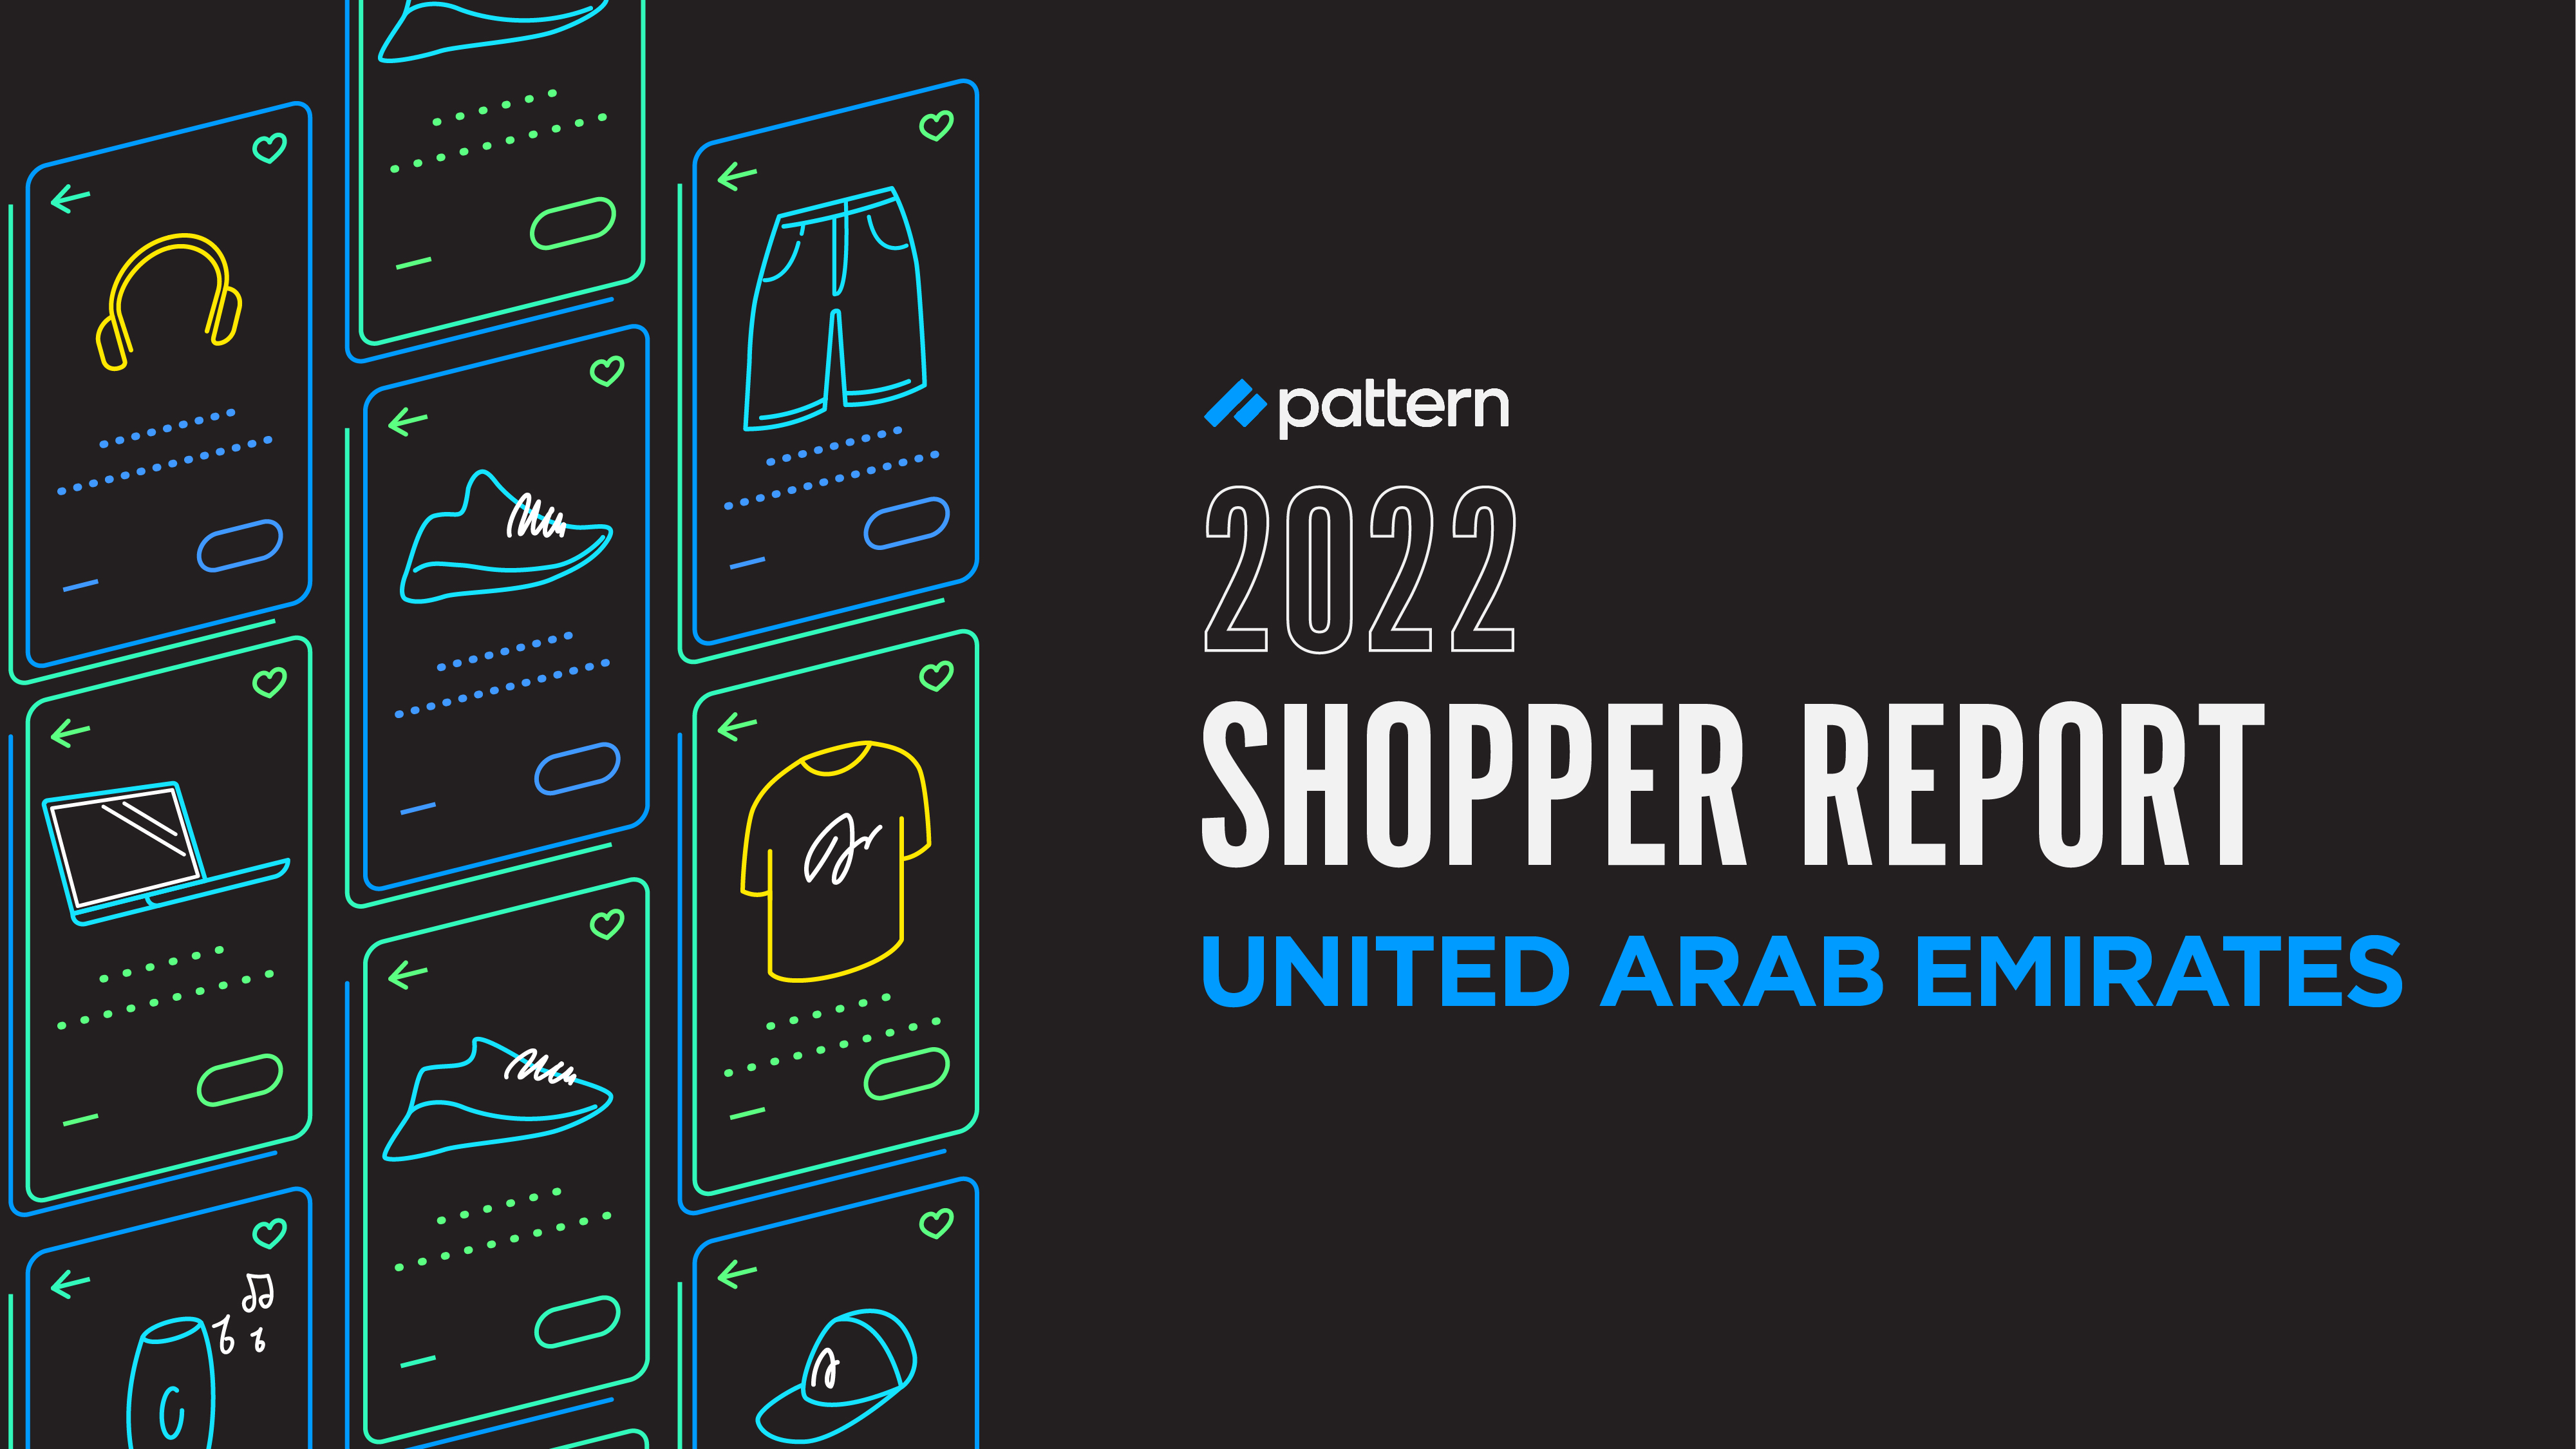 Pattern UAE Shopper Report 2022 Cover Image